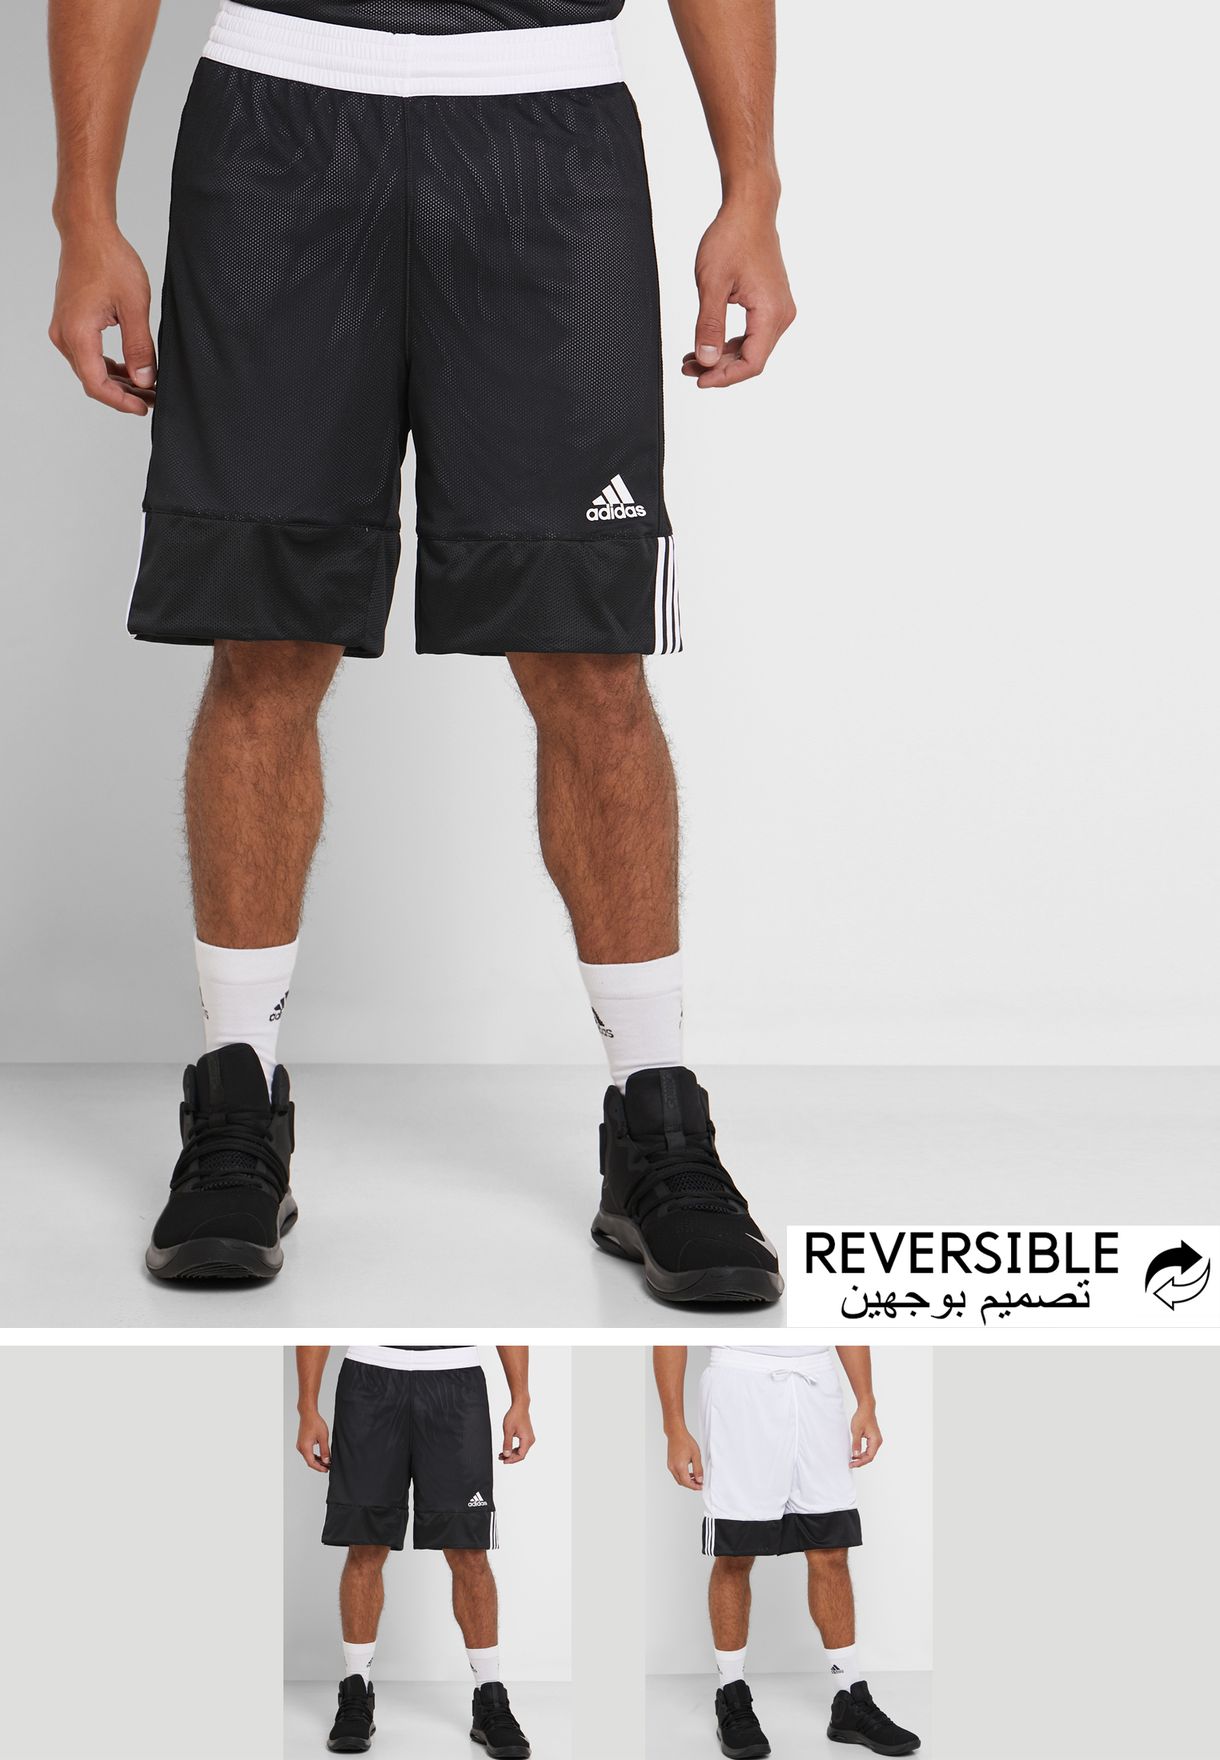 3G Speed Reversible Shorts